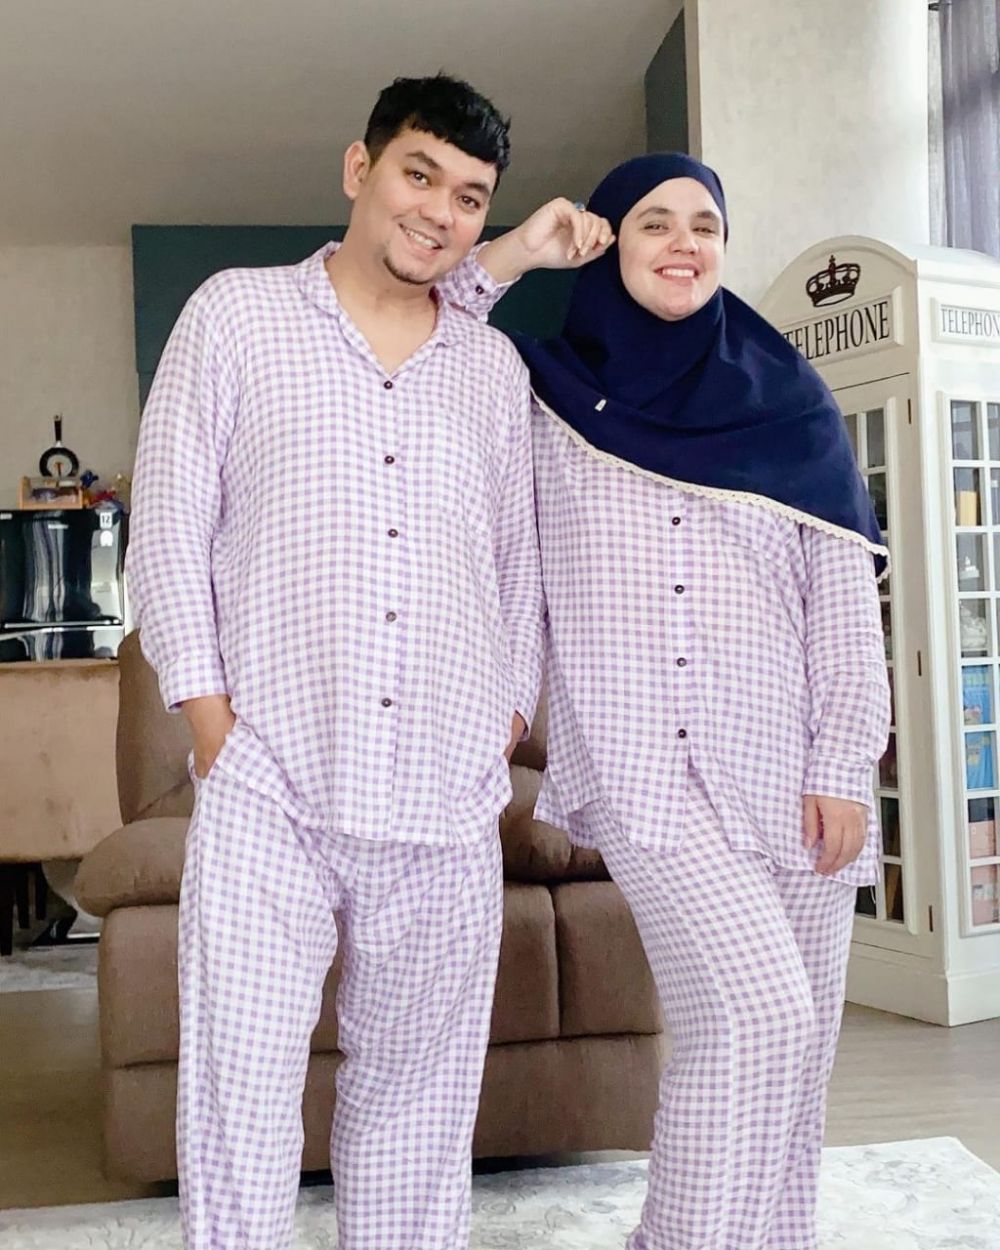 9 Potret Indra Bekti dan Istri Pakai Outfit Senada, Couple Goals!